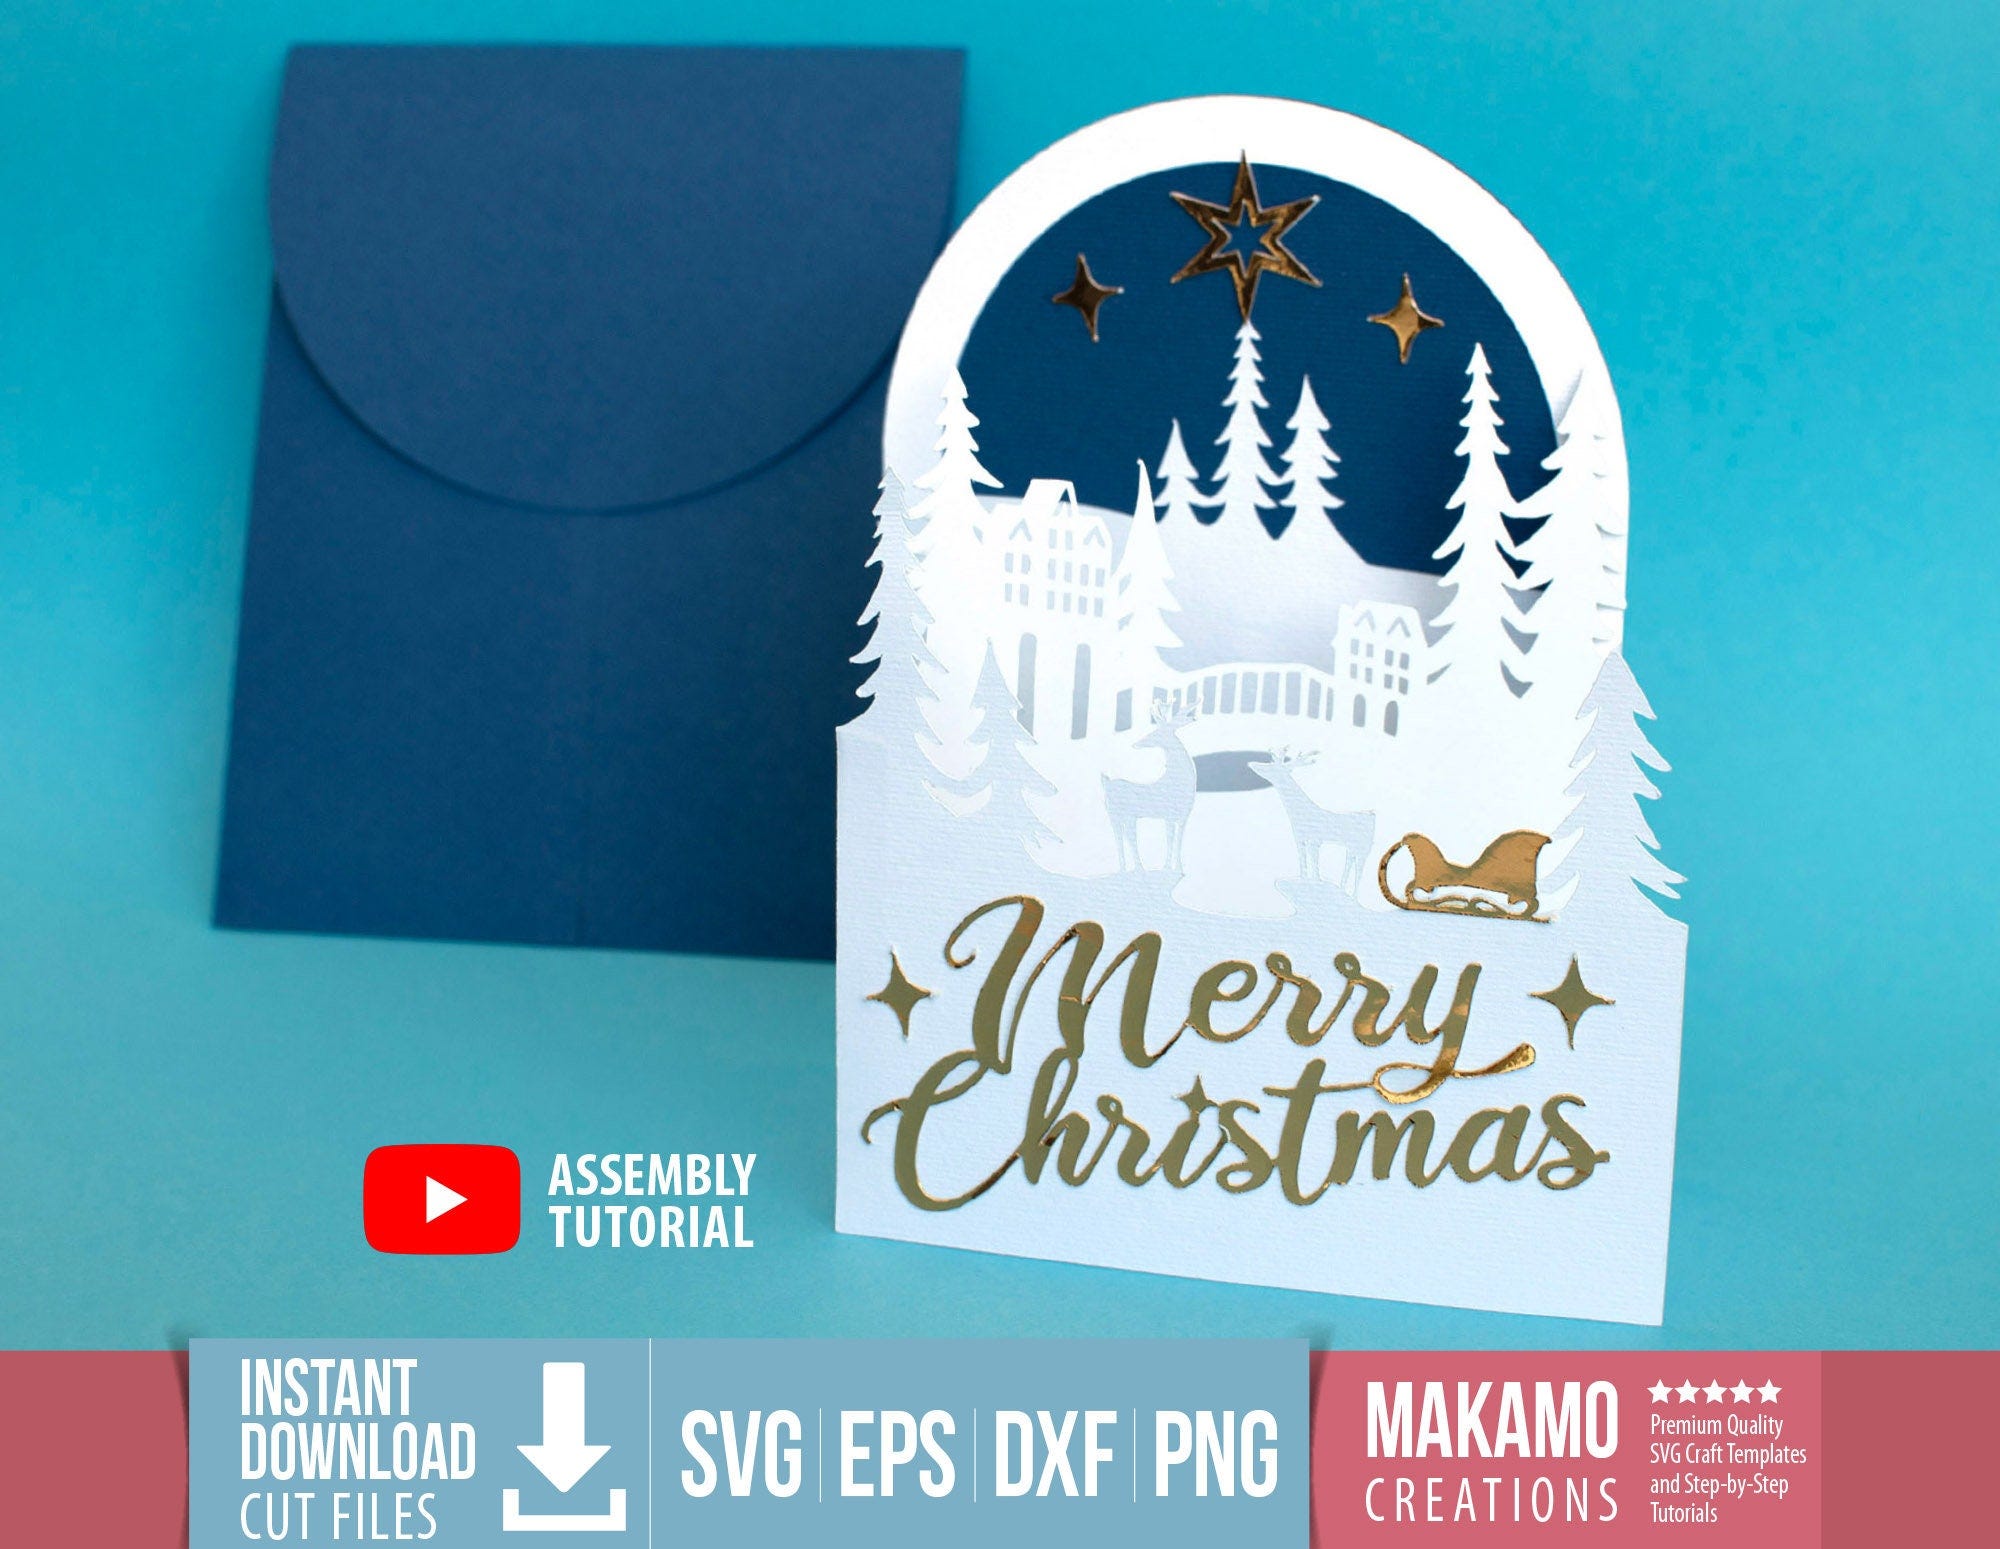 3 Fold Christmas Card svg template, Accordion 3D pop up Christmas Card, Classic Christmas design, Merry Christmas card cut files for Cricut